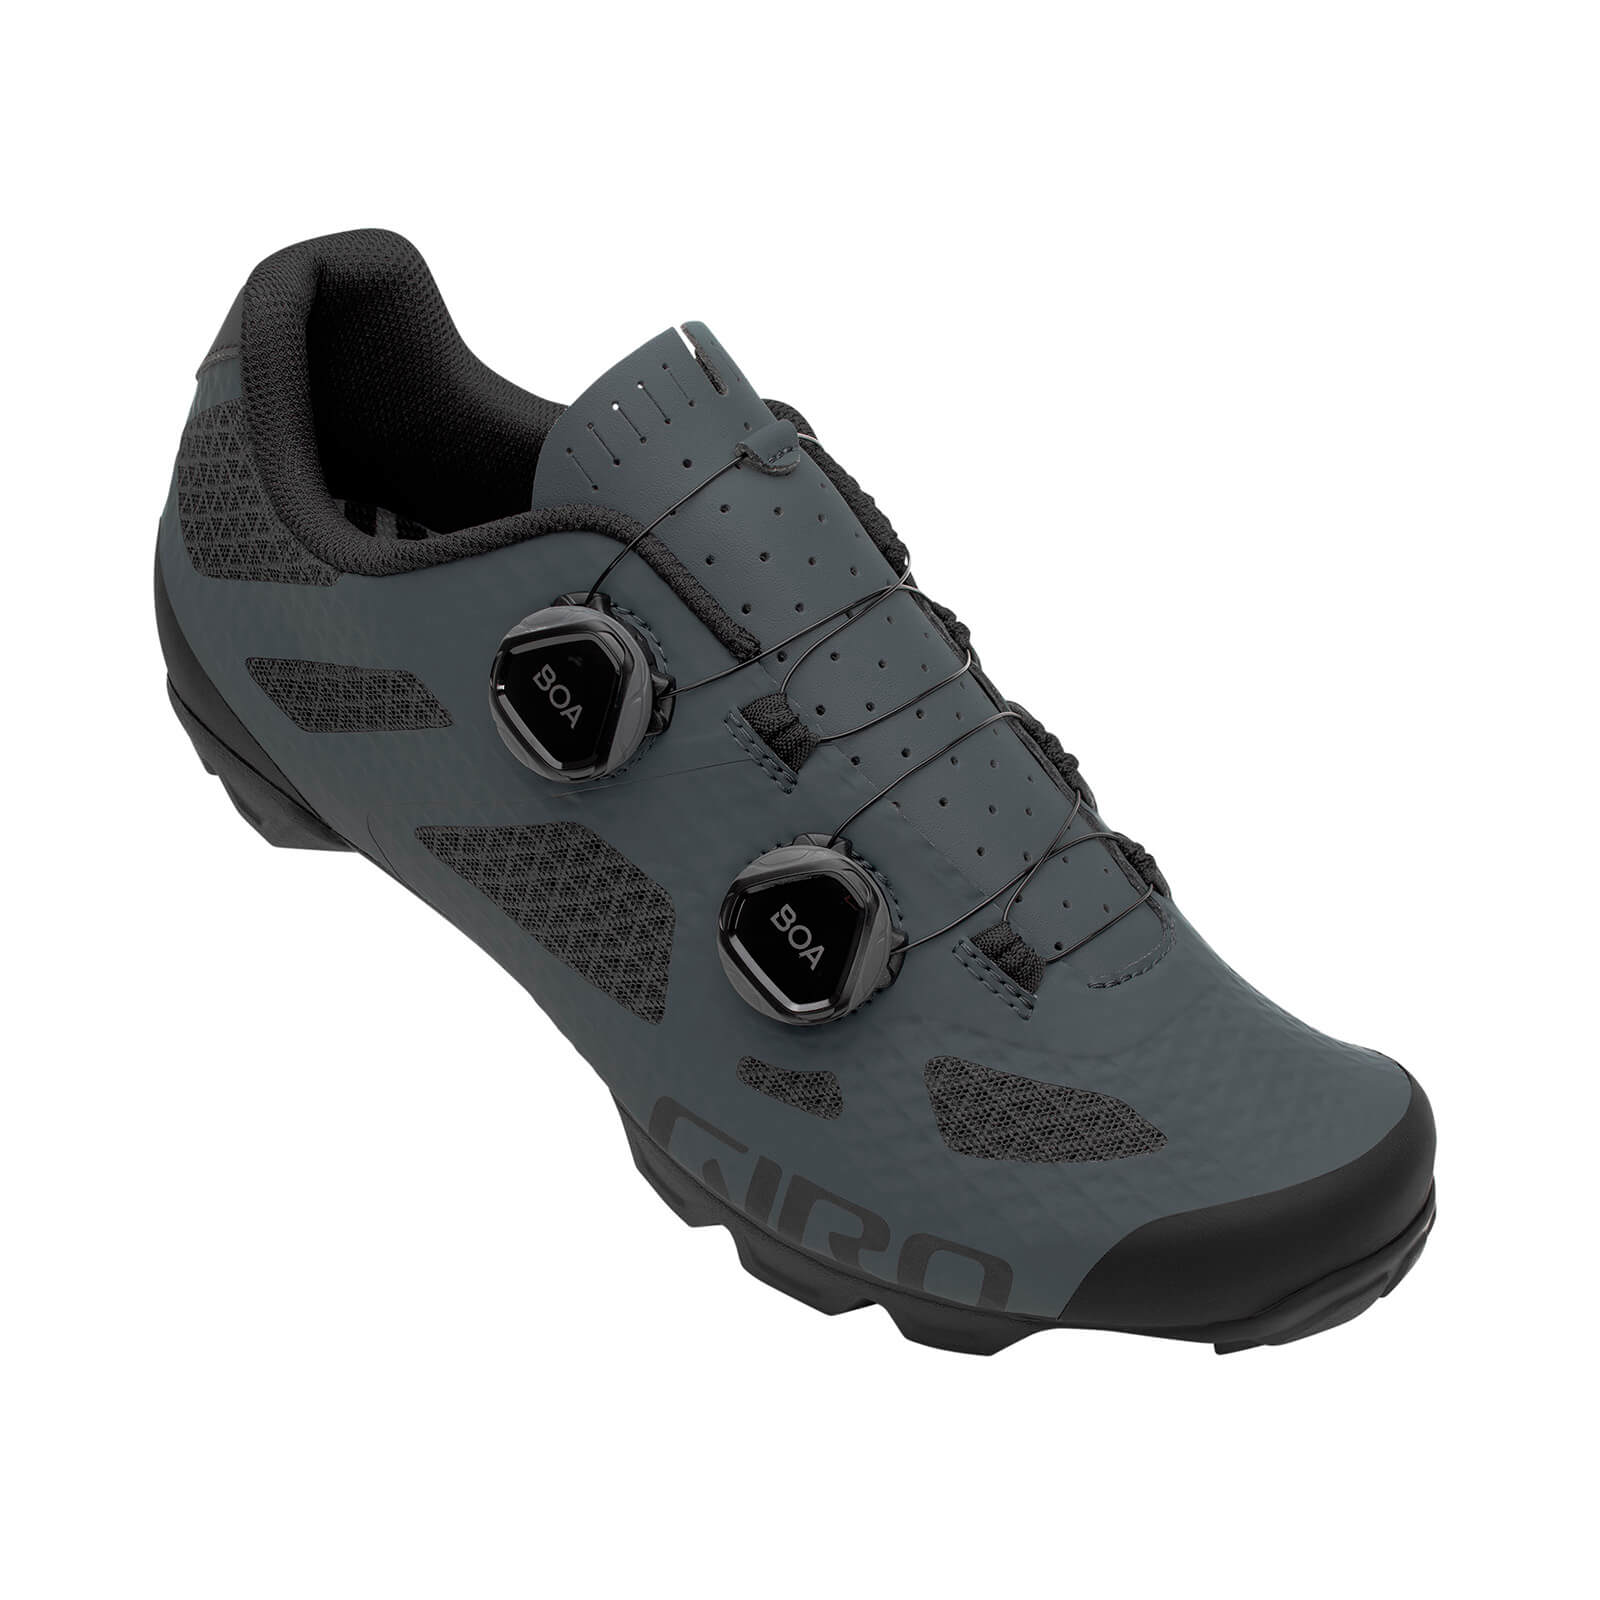 giro sector mtb shoes - eu 48 - port grey